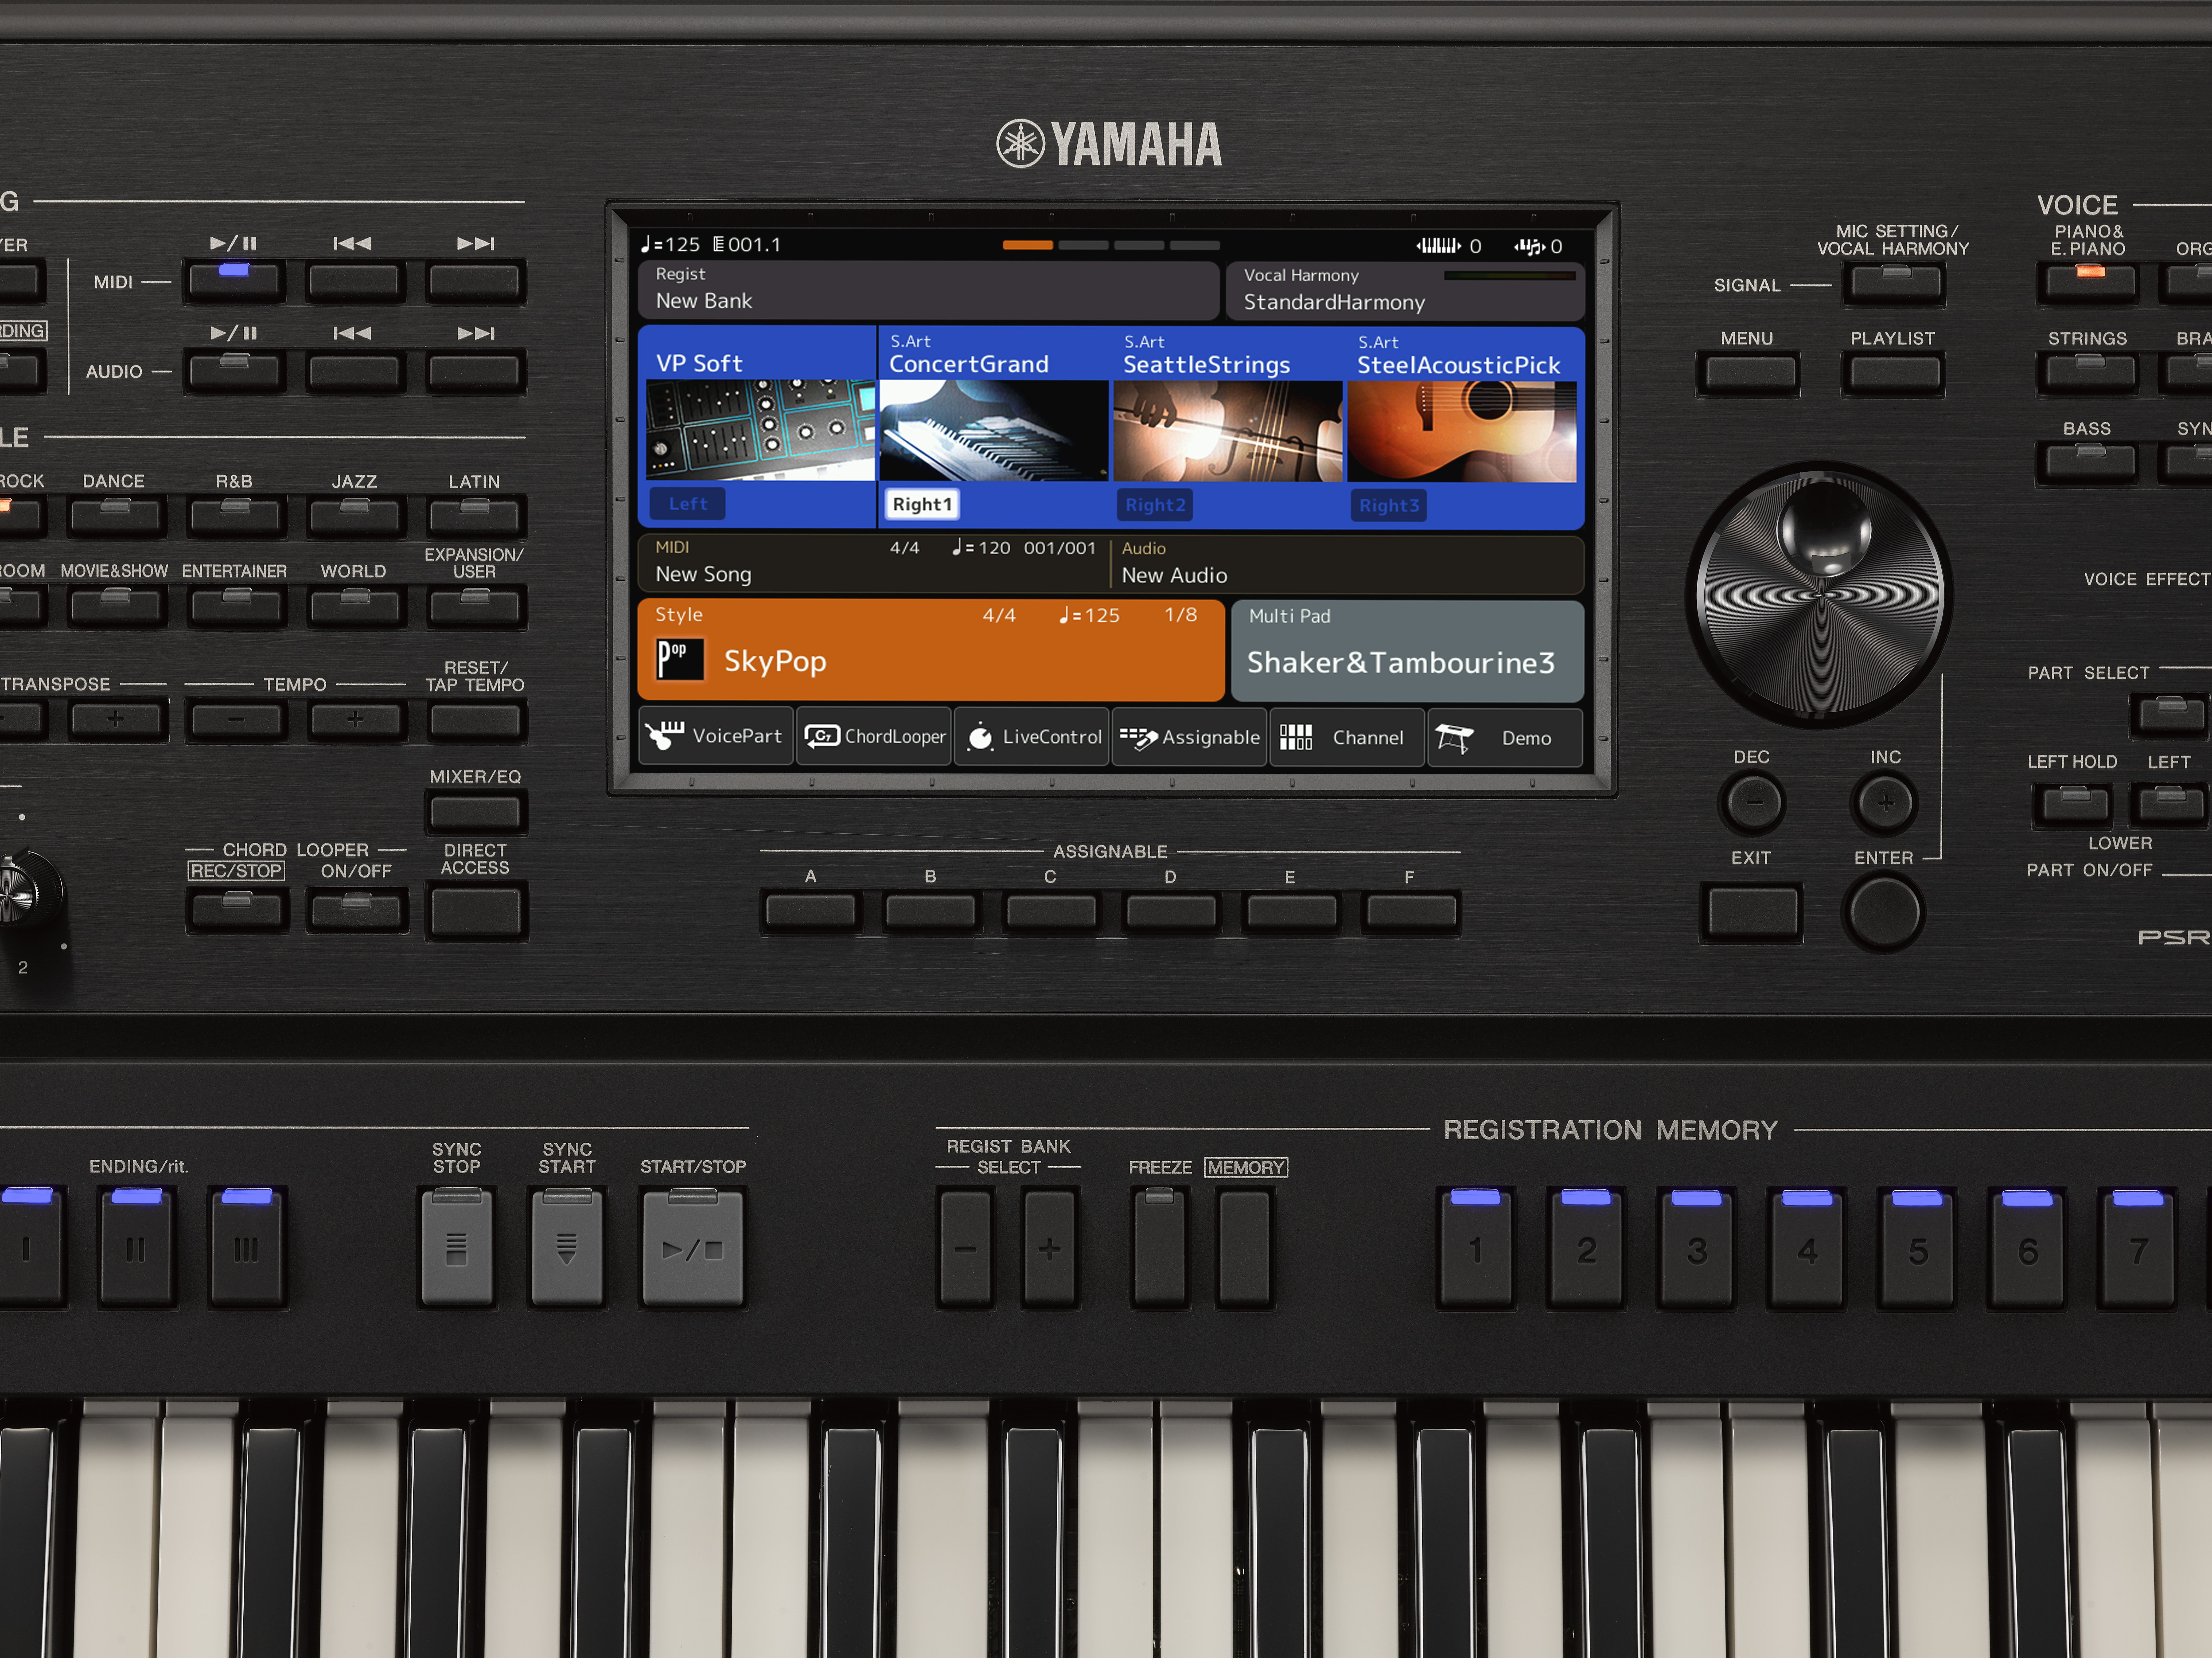 Yamaha Psr-sx900 - Teclado de entertainer / Arreglista - Variation 3